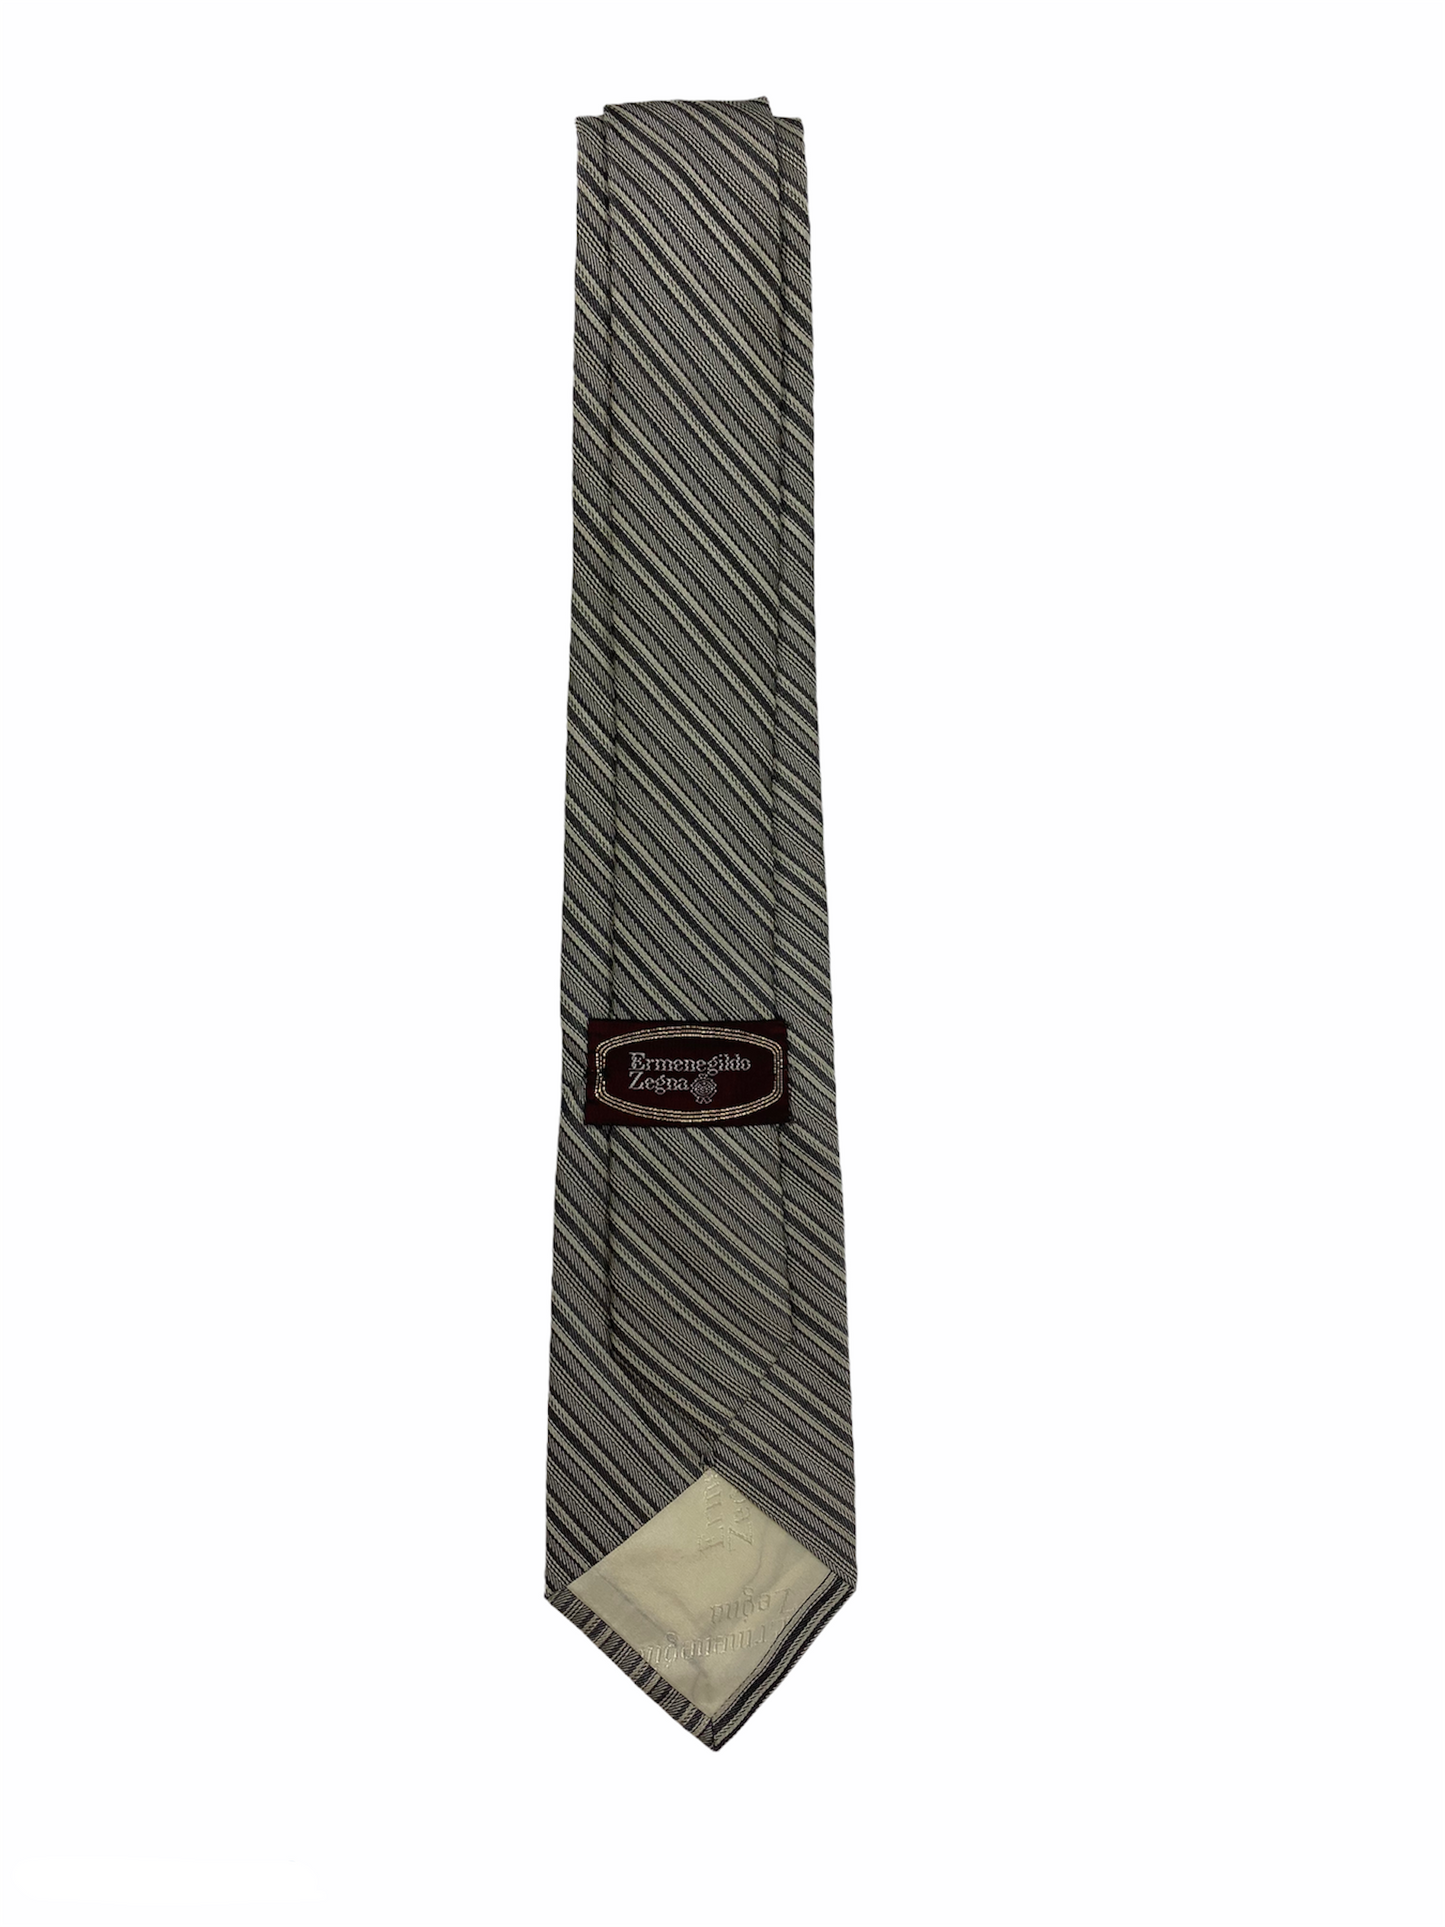 Cravate Ermenegildo Zegna rayée grise